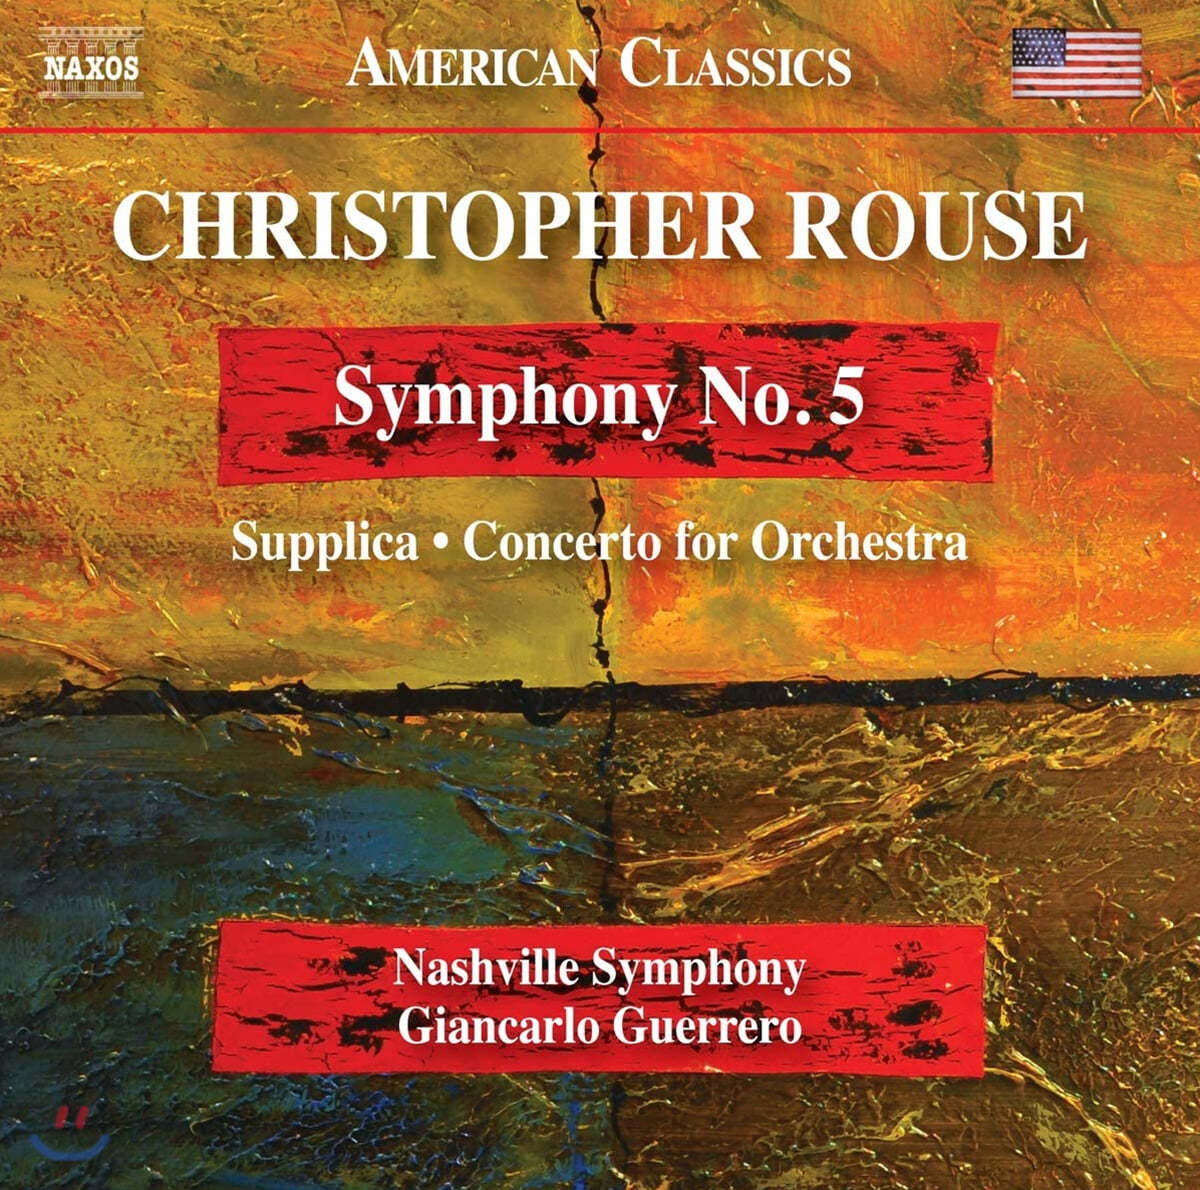 Giancarlo Guerrero 크리스토퍼 루스: 교향곡 5번, 서플리카 , 관현악을 위한 협주곡 (Christopher Rouse: Symphony No. 5, Supplica, Concerto for Orchestra)